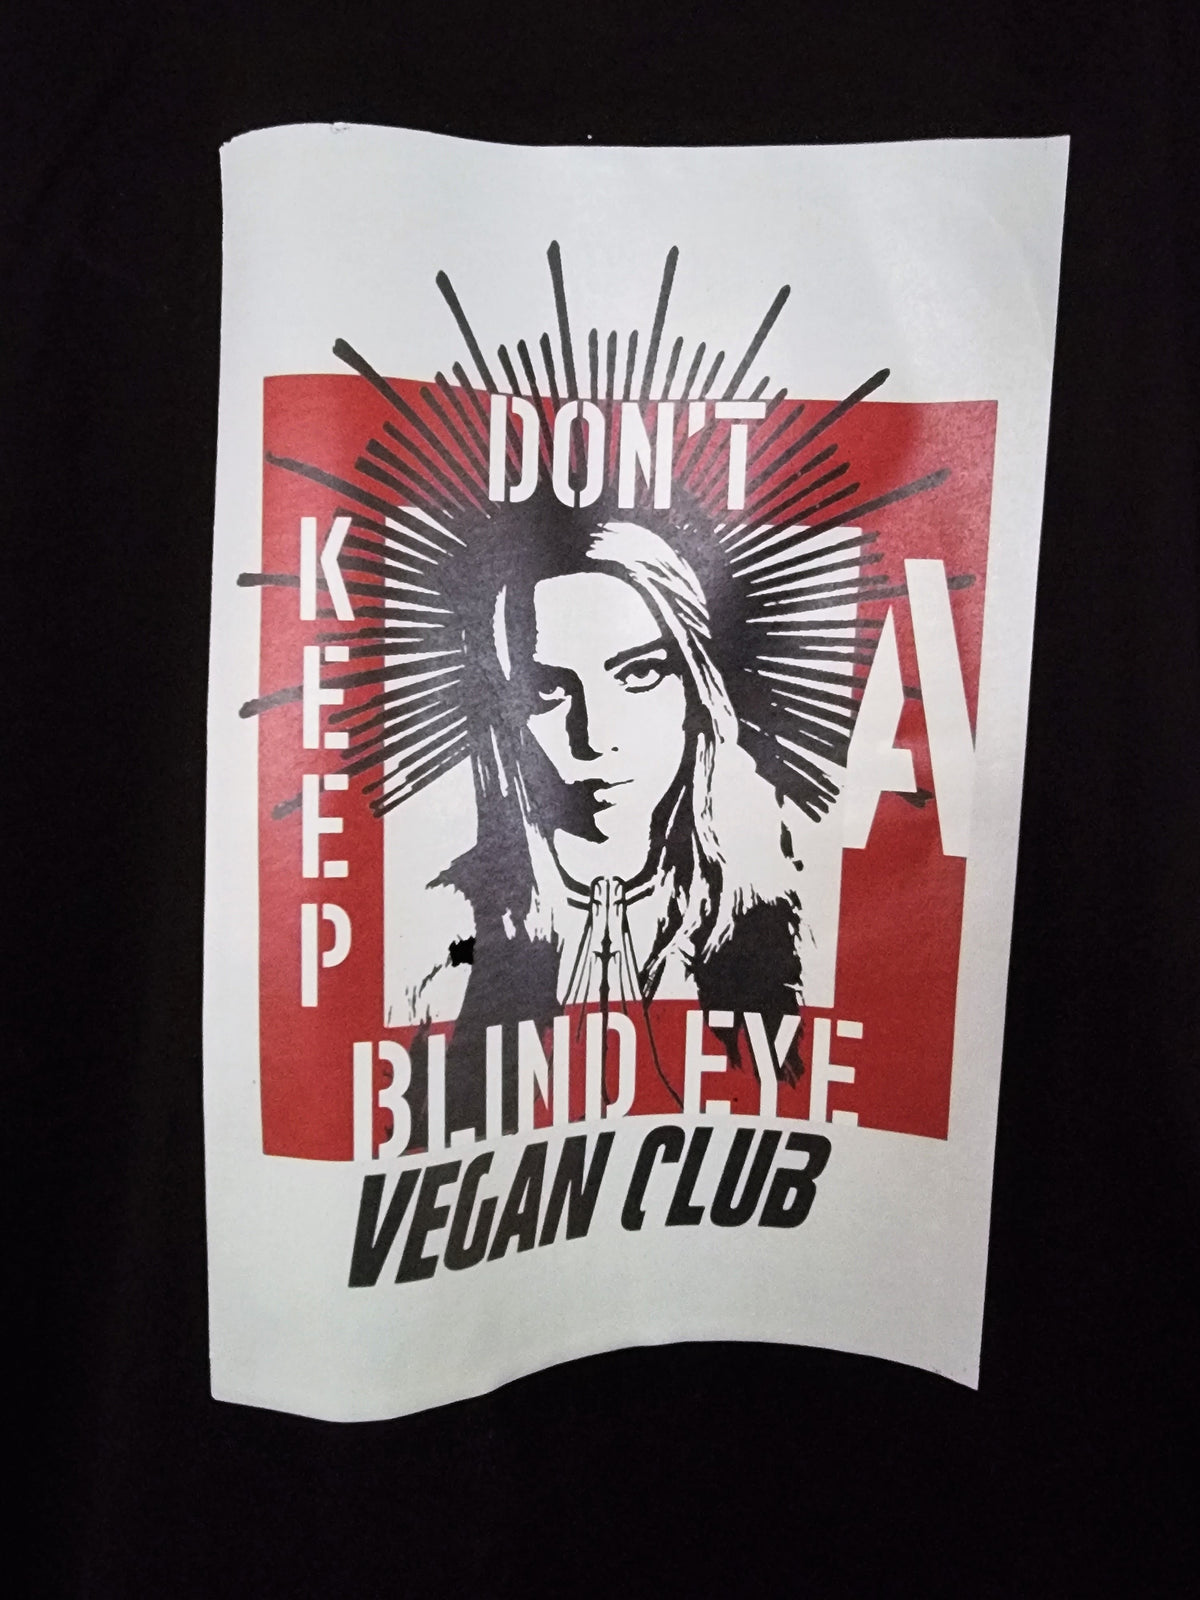 SOLD OUT - Billie Eilish Vegan Club T-shirt Shalt Not Kill front color design